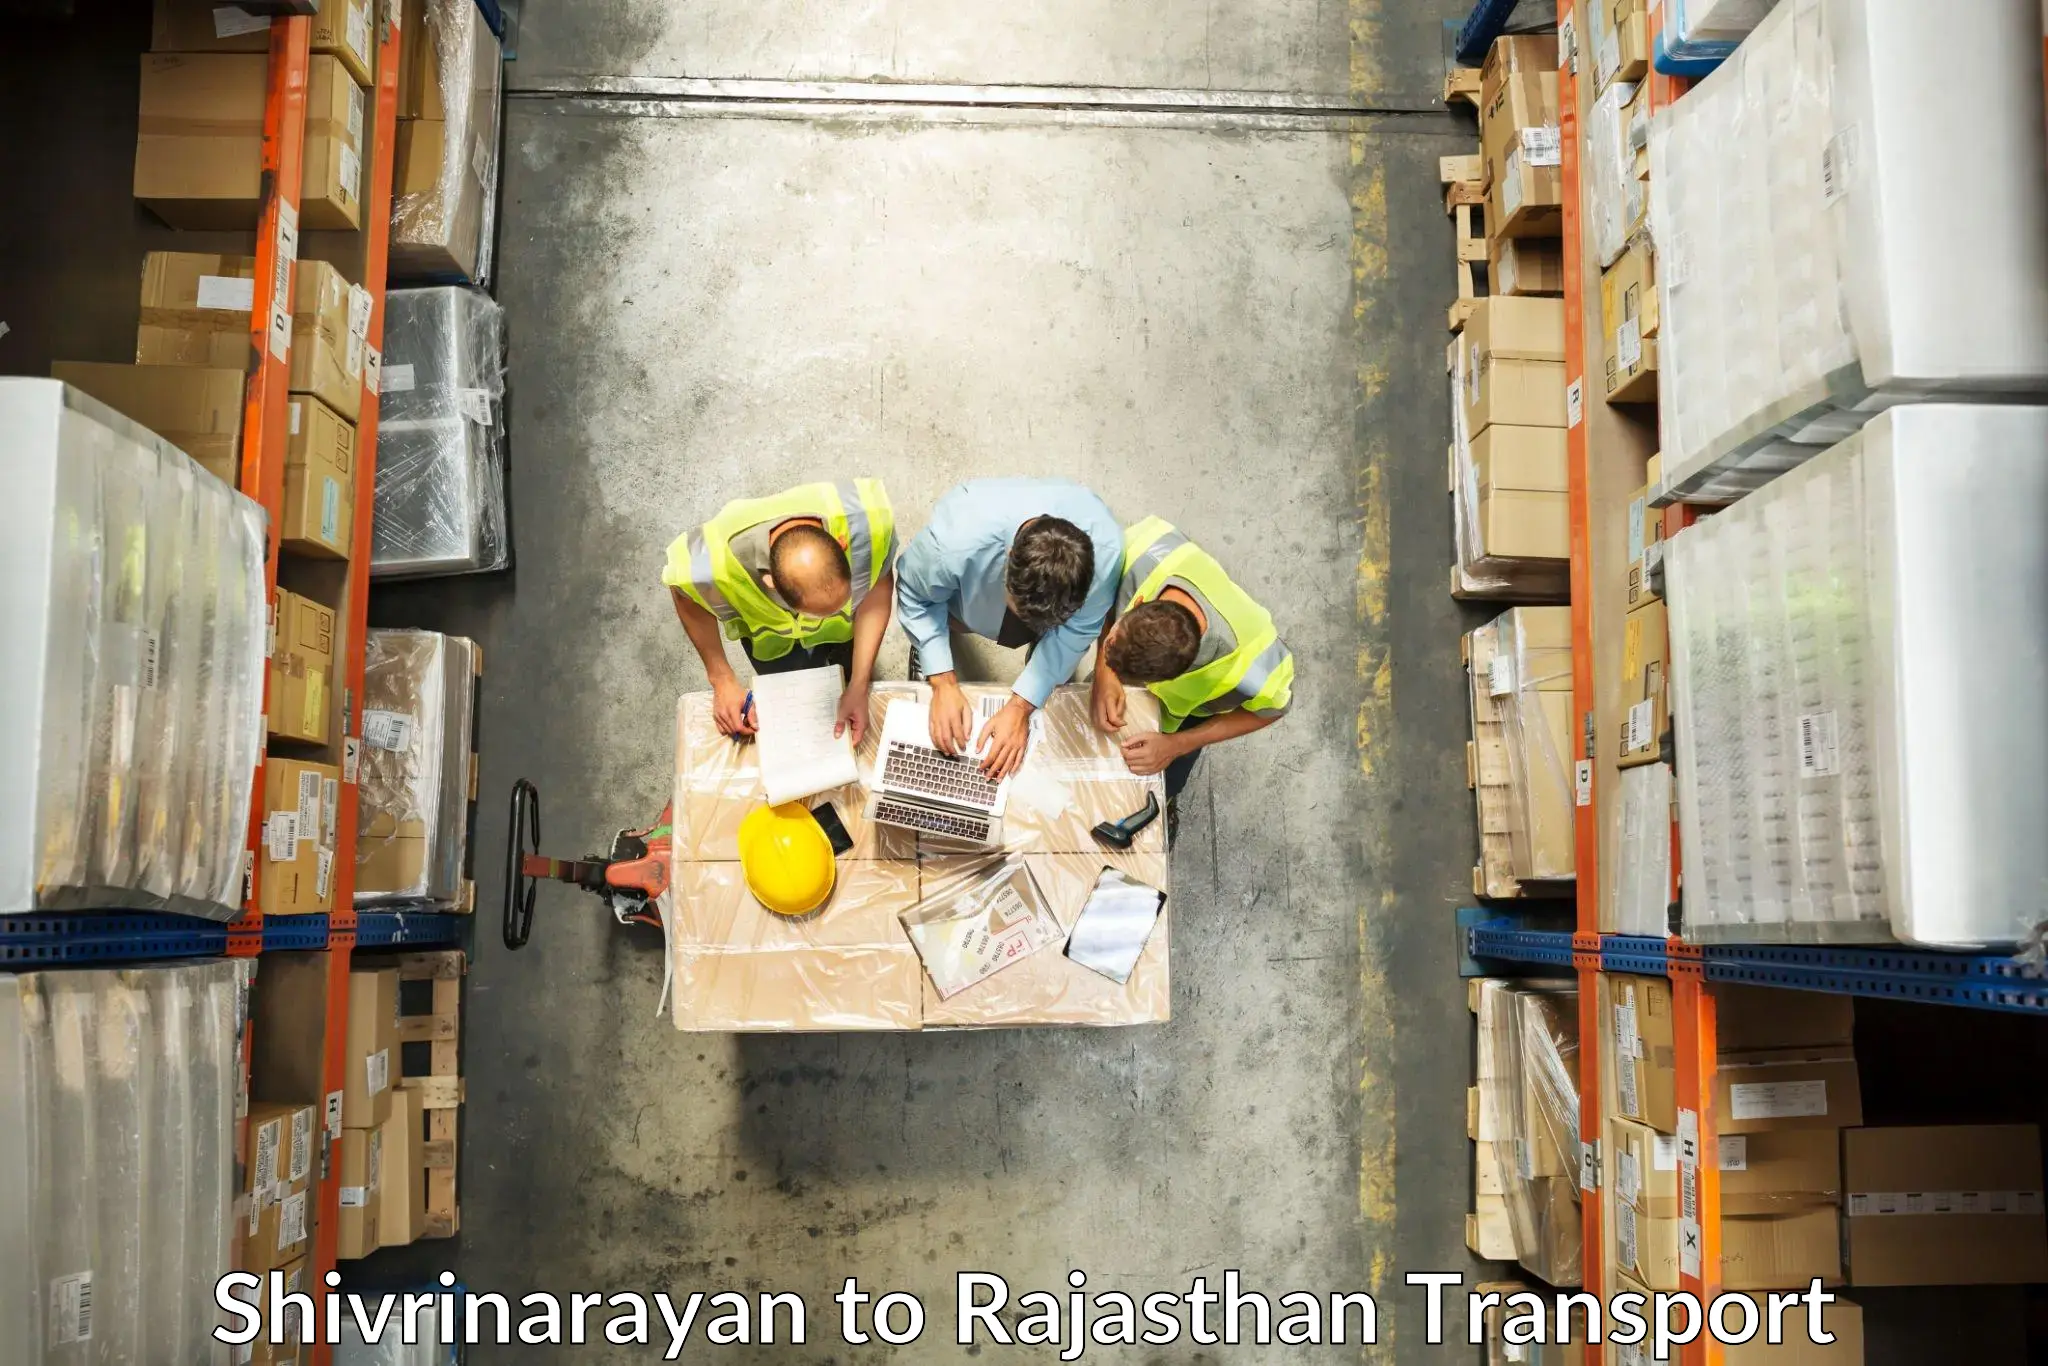 Truck transport companies in India Shivrinarayan to Renwal